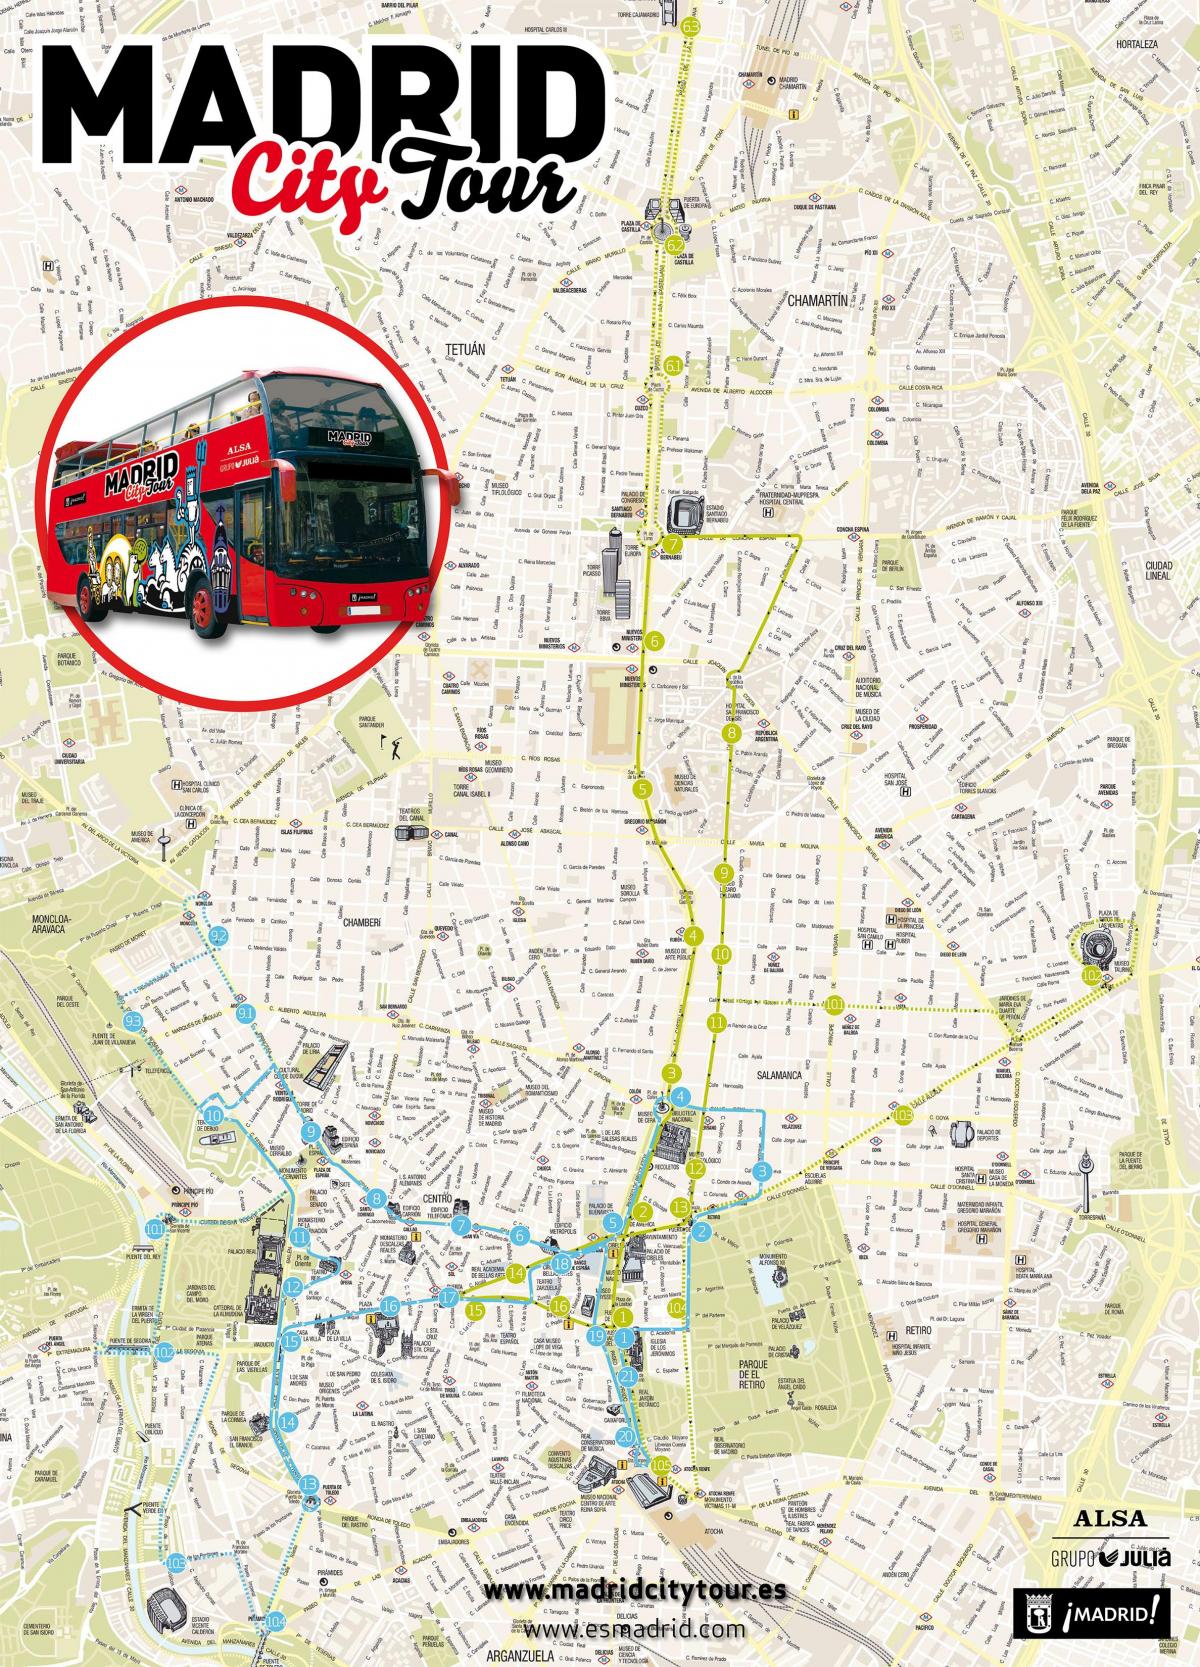 Madrid city bus tour zemljevid